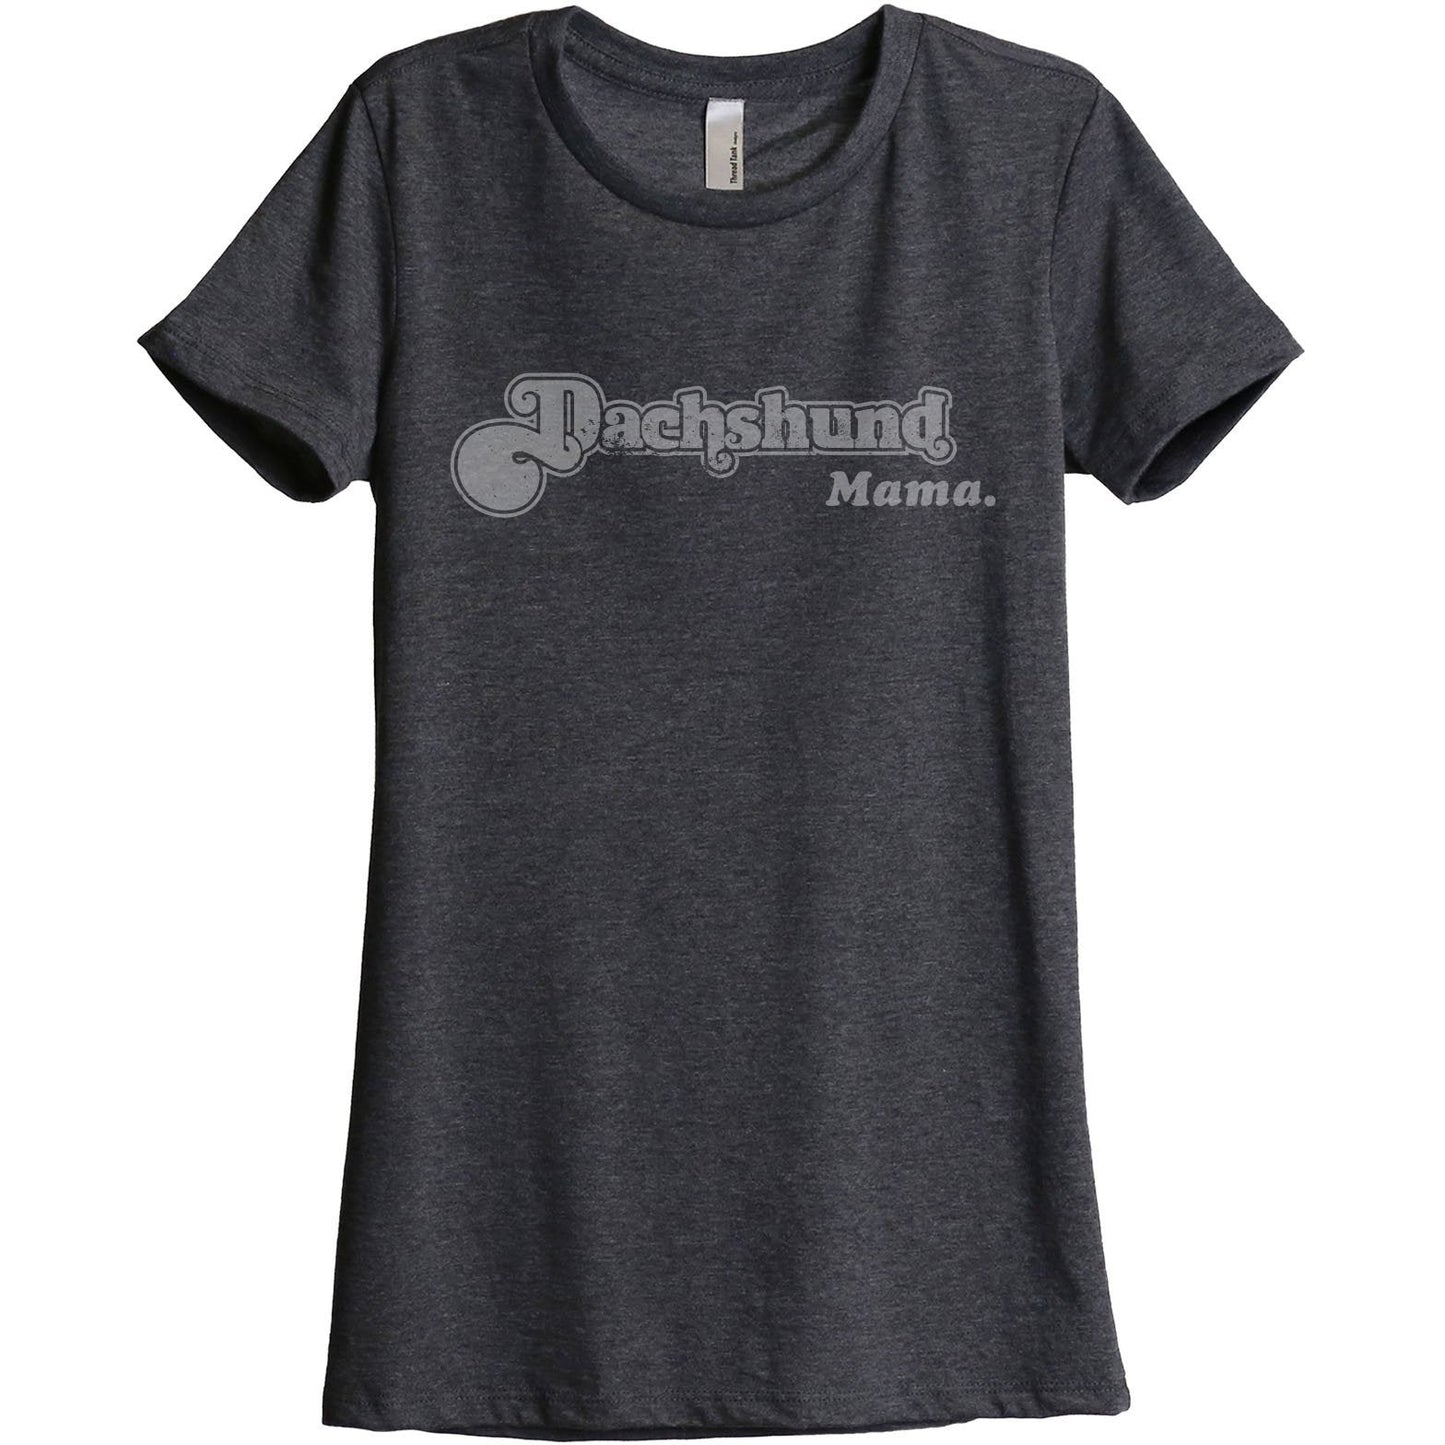 Dachshund Mama Women's Relaxed Crewneck T-Shirt Top Tee Charcoal Grey
